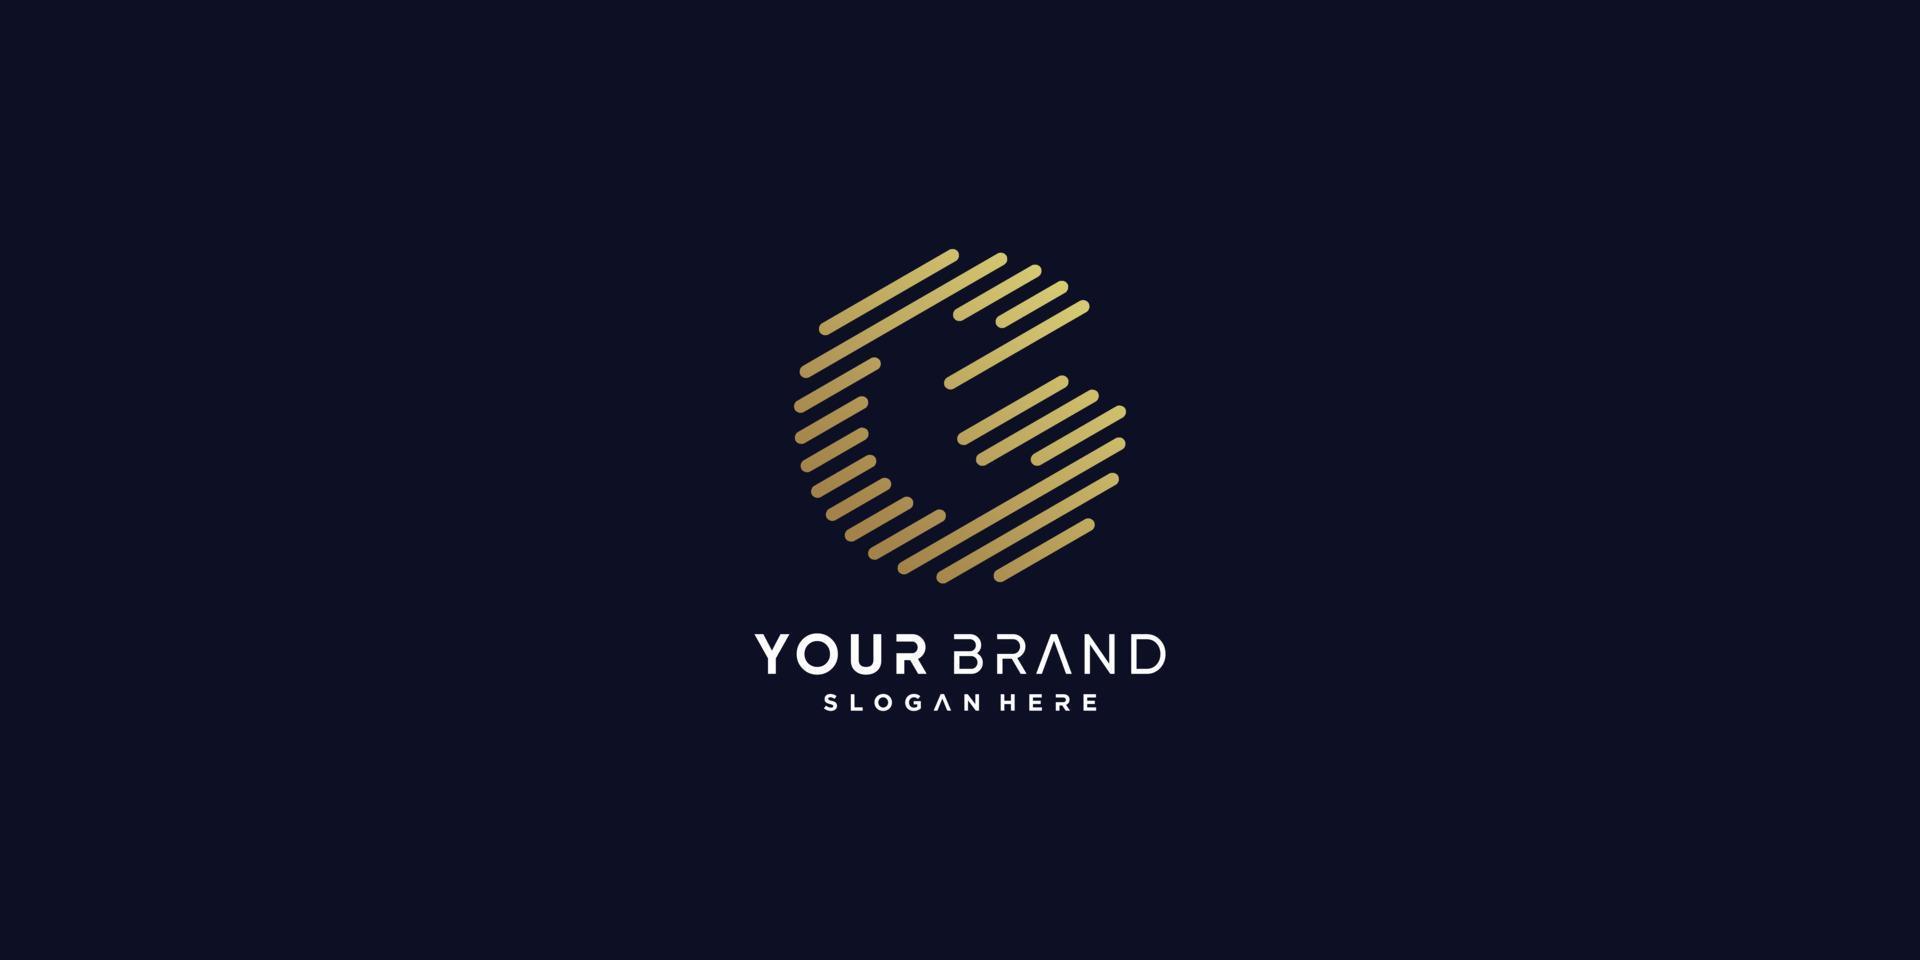 Golden G letter logo with modern creative style Premium Vector part 3